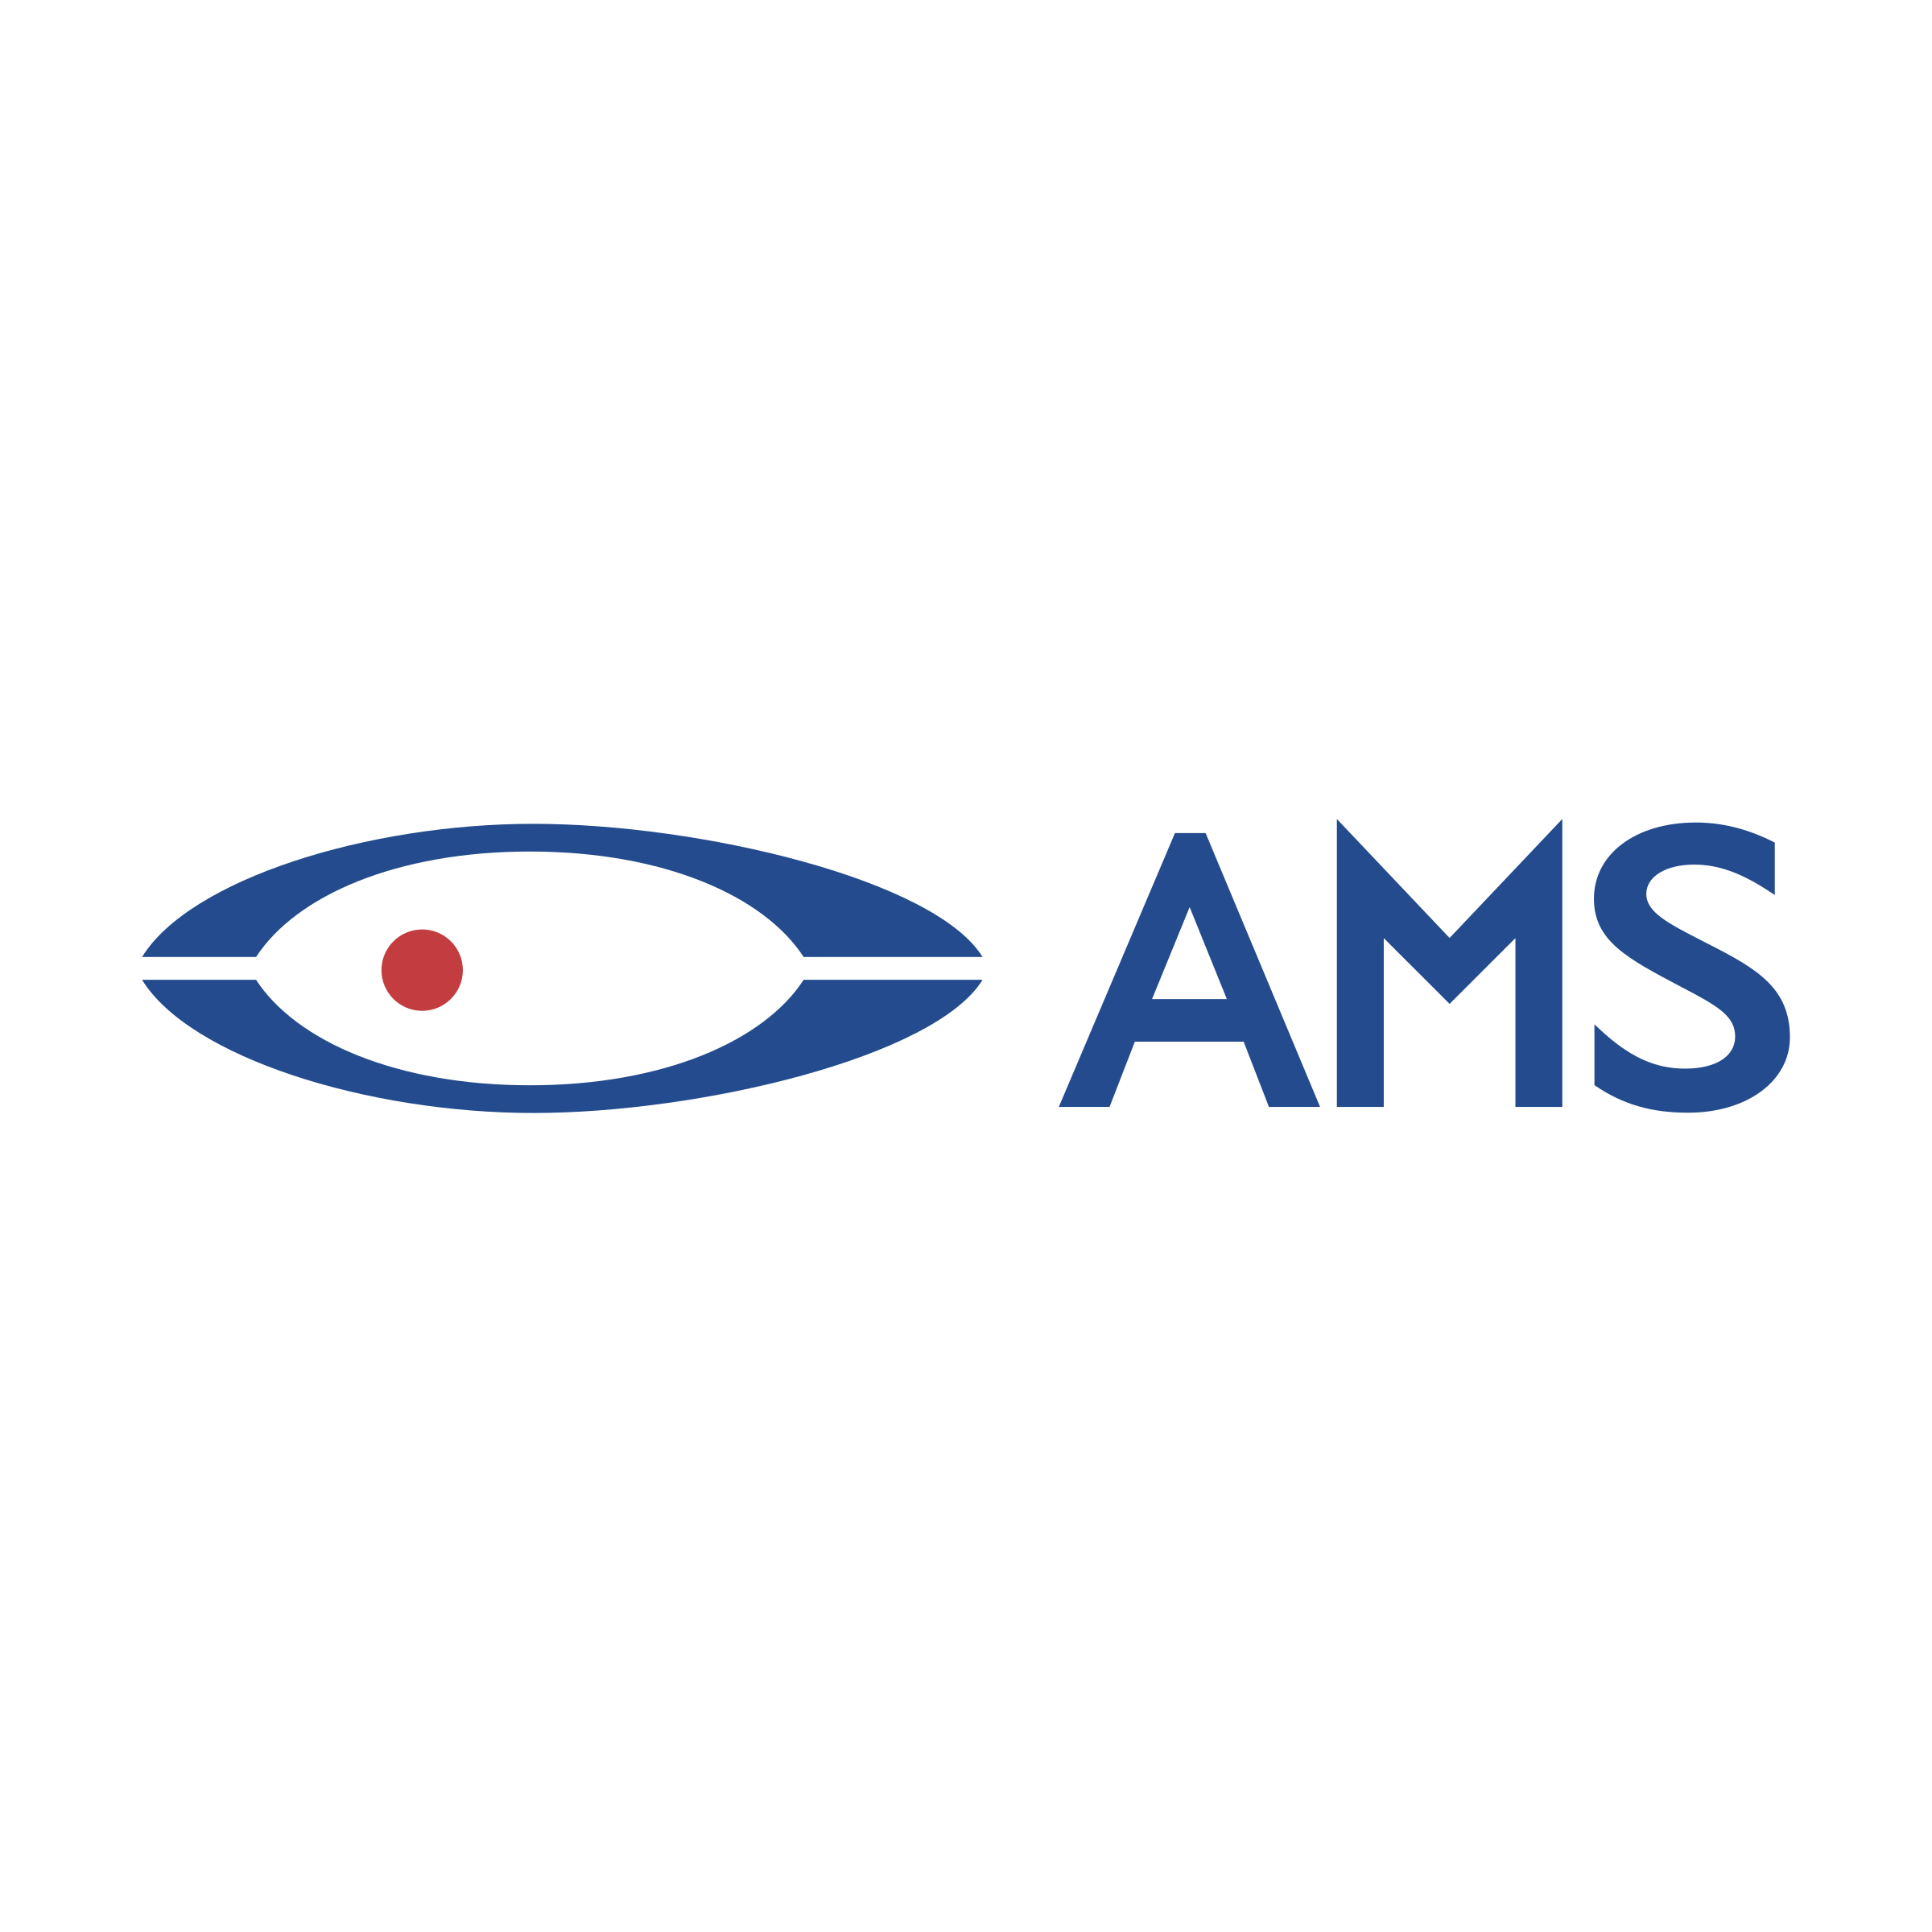 AMS Logo - AMS Logo PNG Transparent & SVG Vector - Freebie Supply